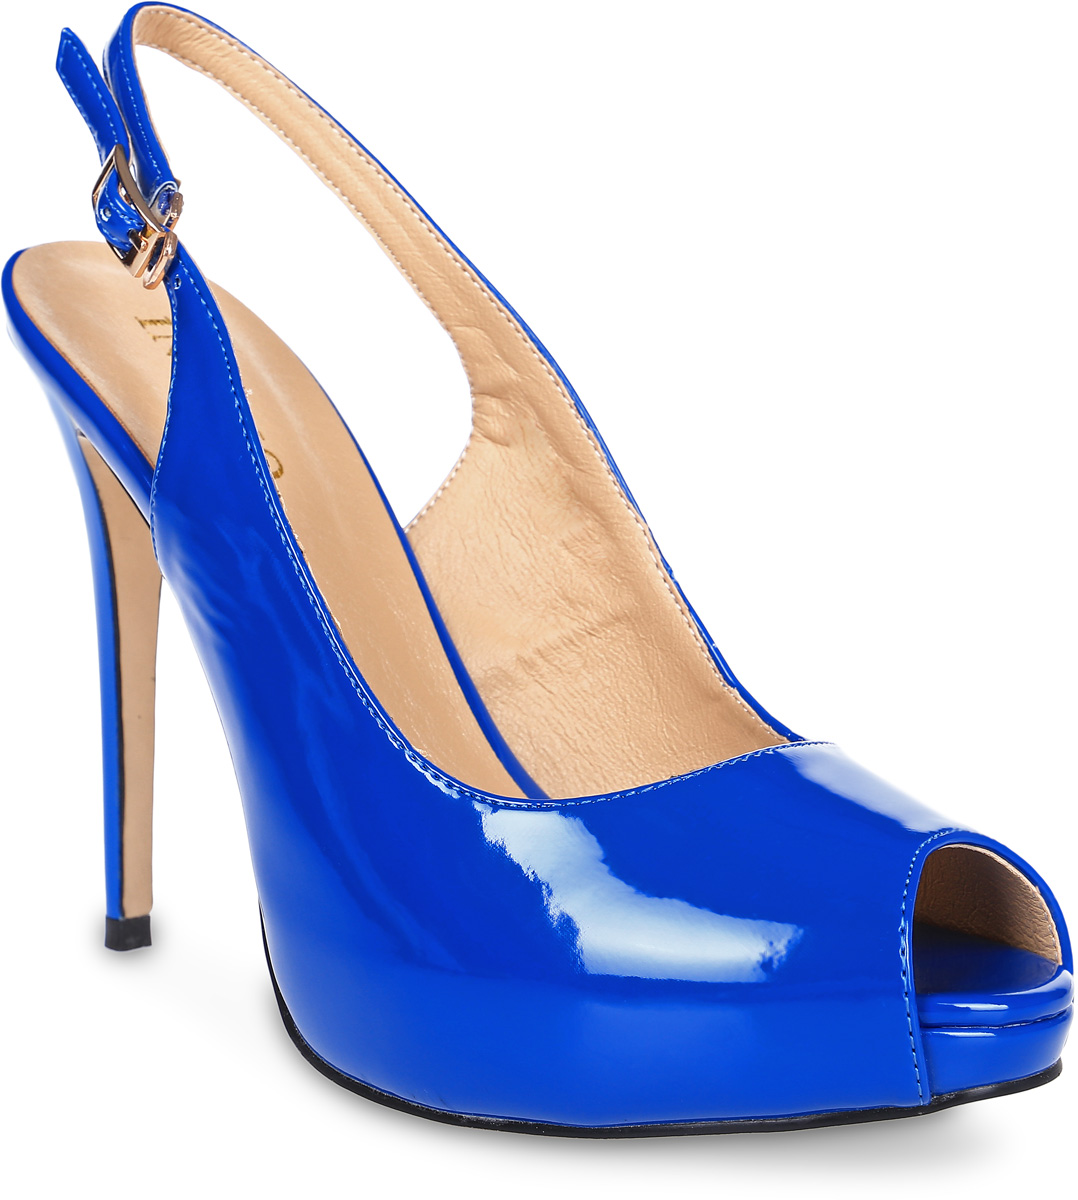 Туфли женские Inario, цвет: синий. 17164-01-8. Размер 35